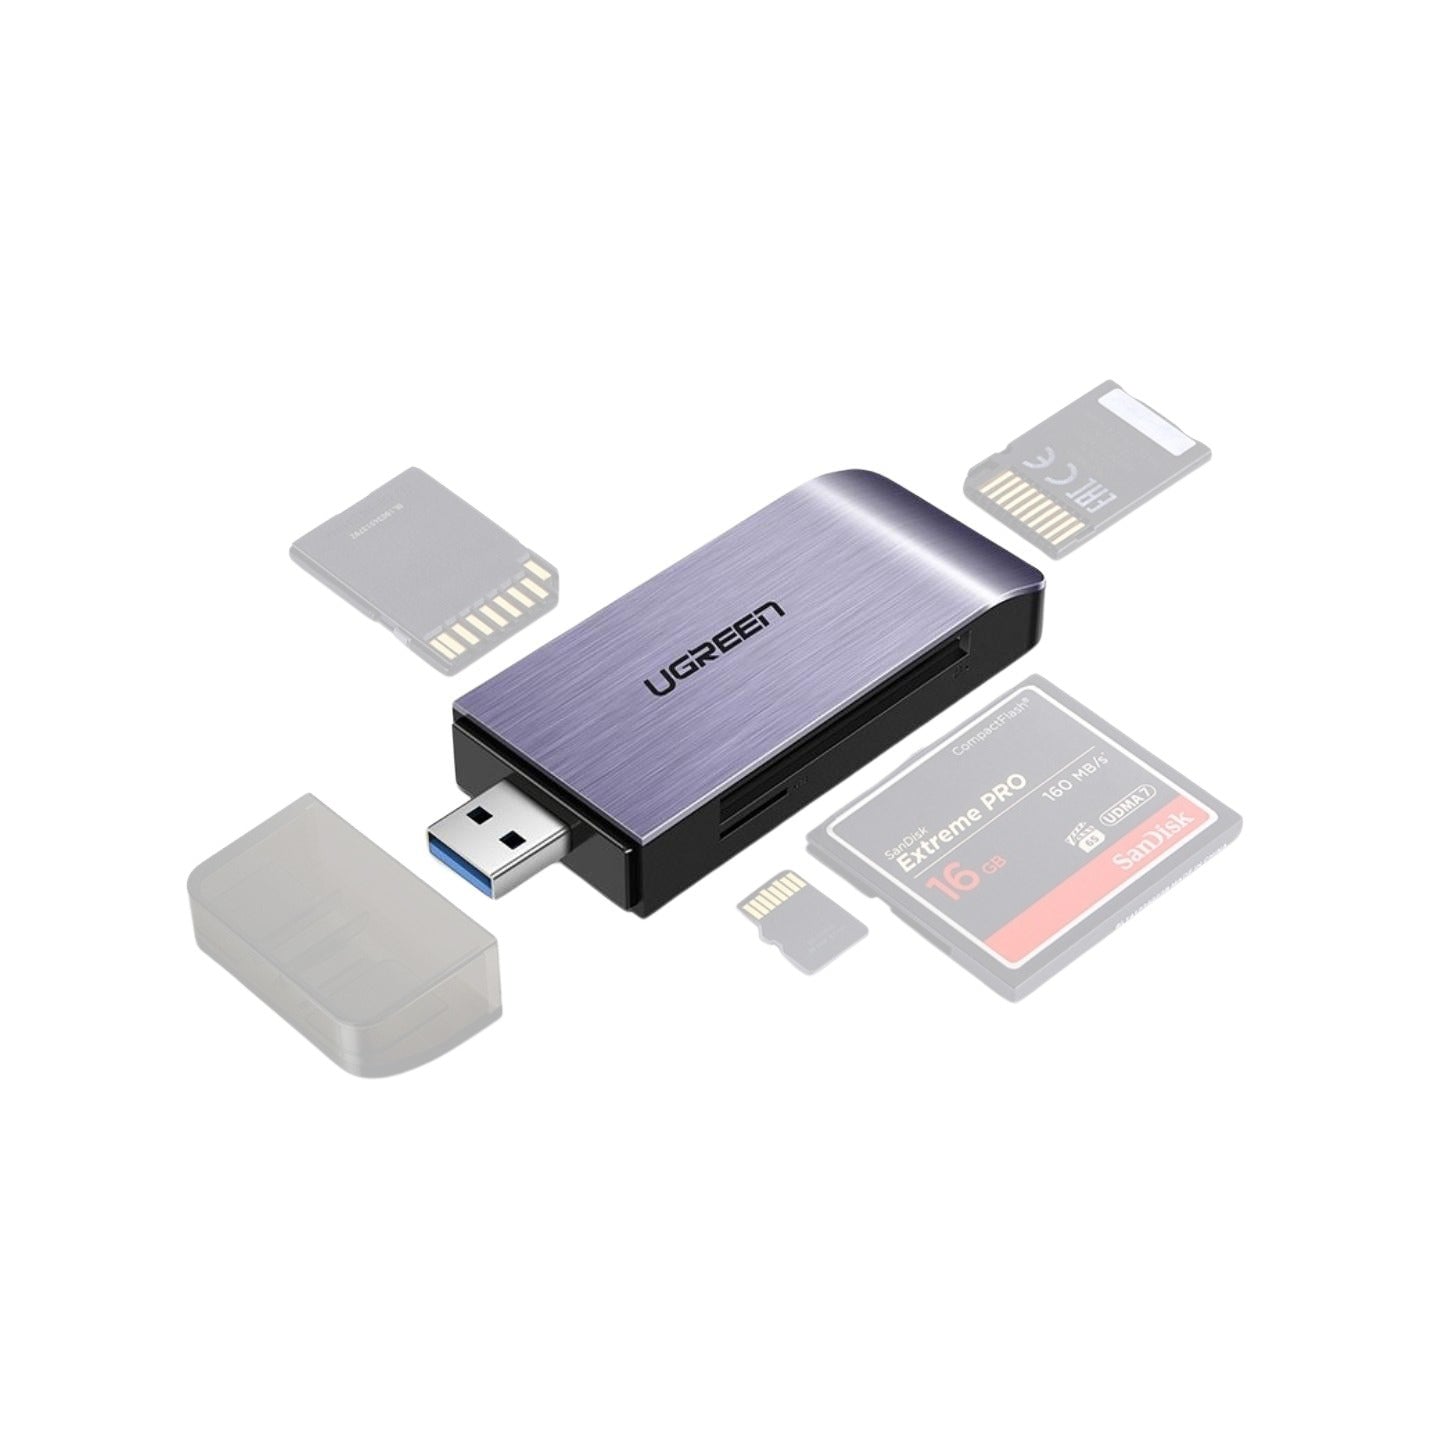 SD Card Reader USB C USB 3.0, Highwings 4 in 1 Multiple External